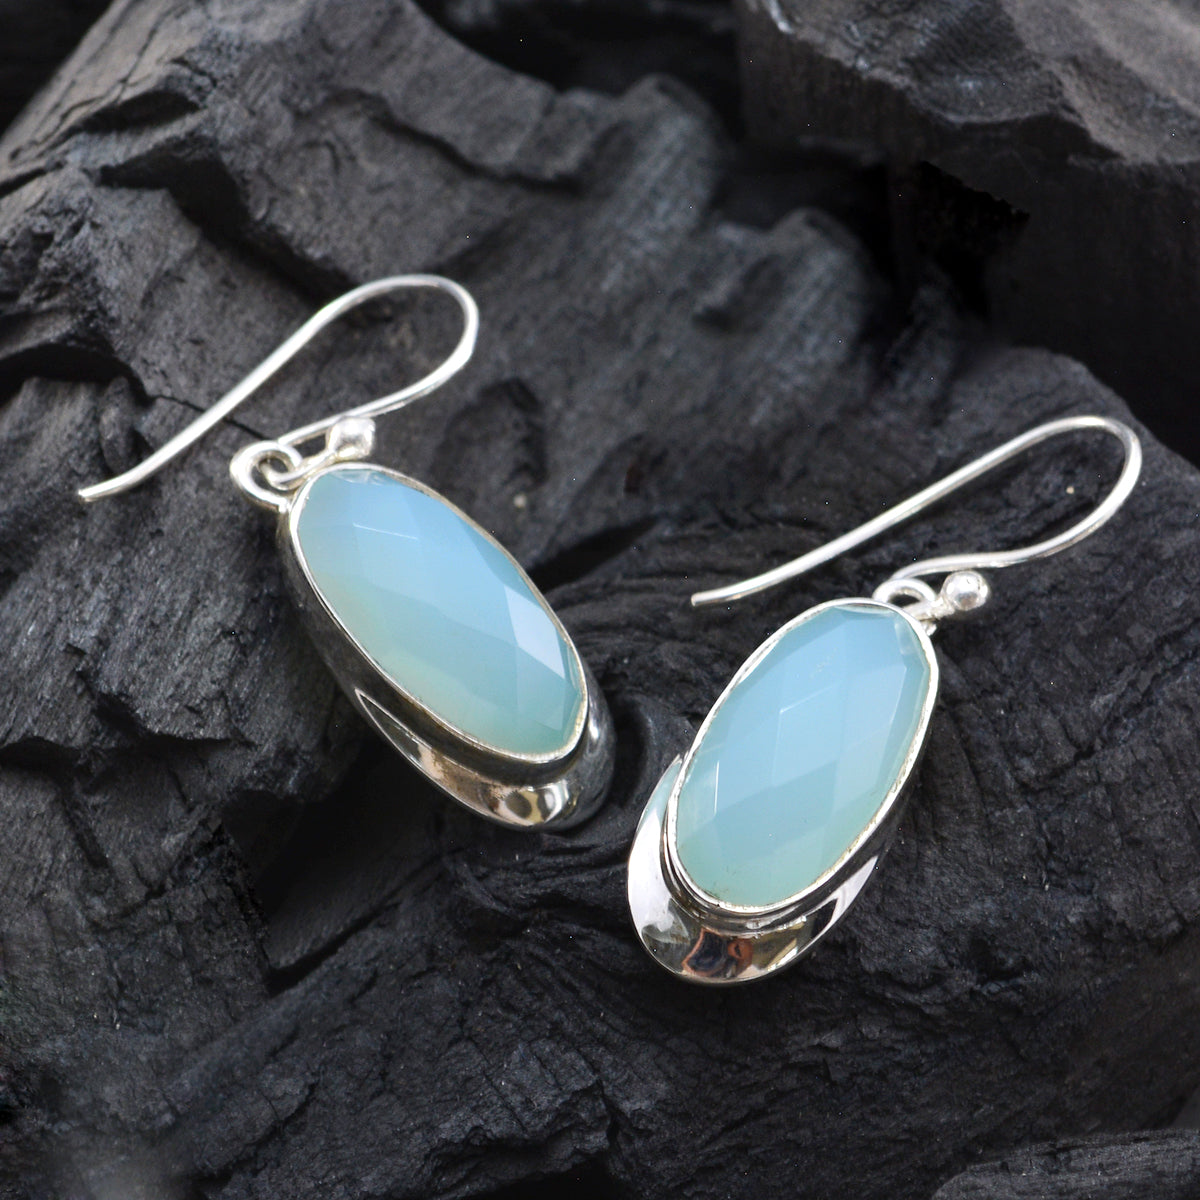 Riyo Natural Gemstone oval Checker Aqua Chalcedoy Silver Earrings gift for halloween